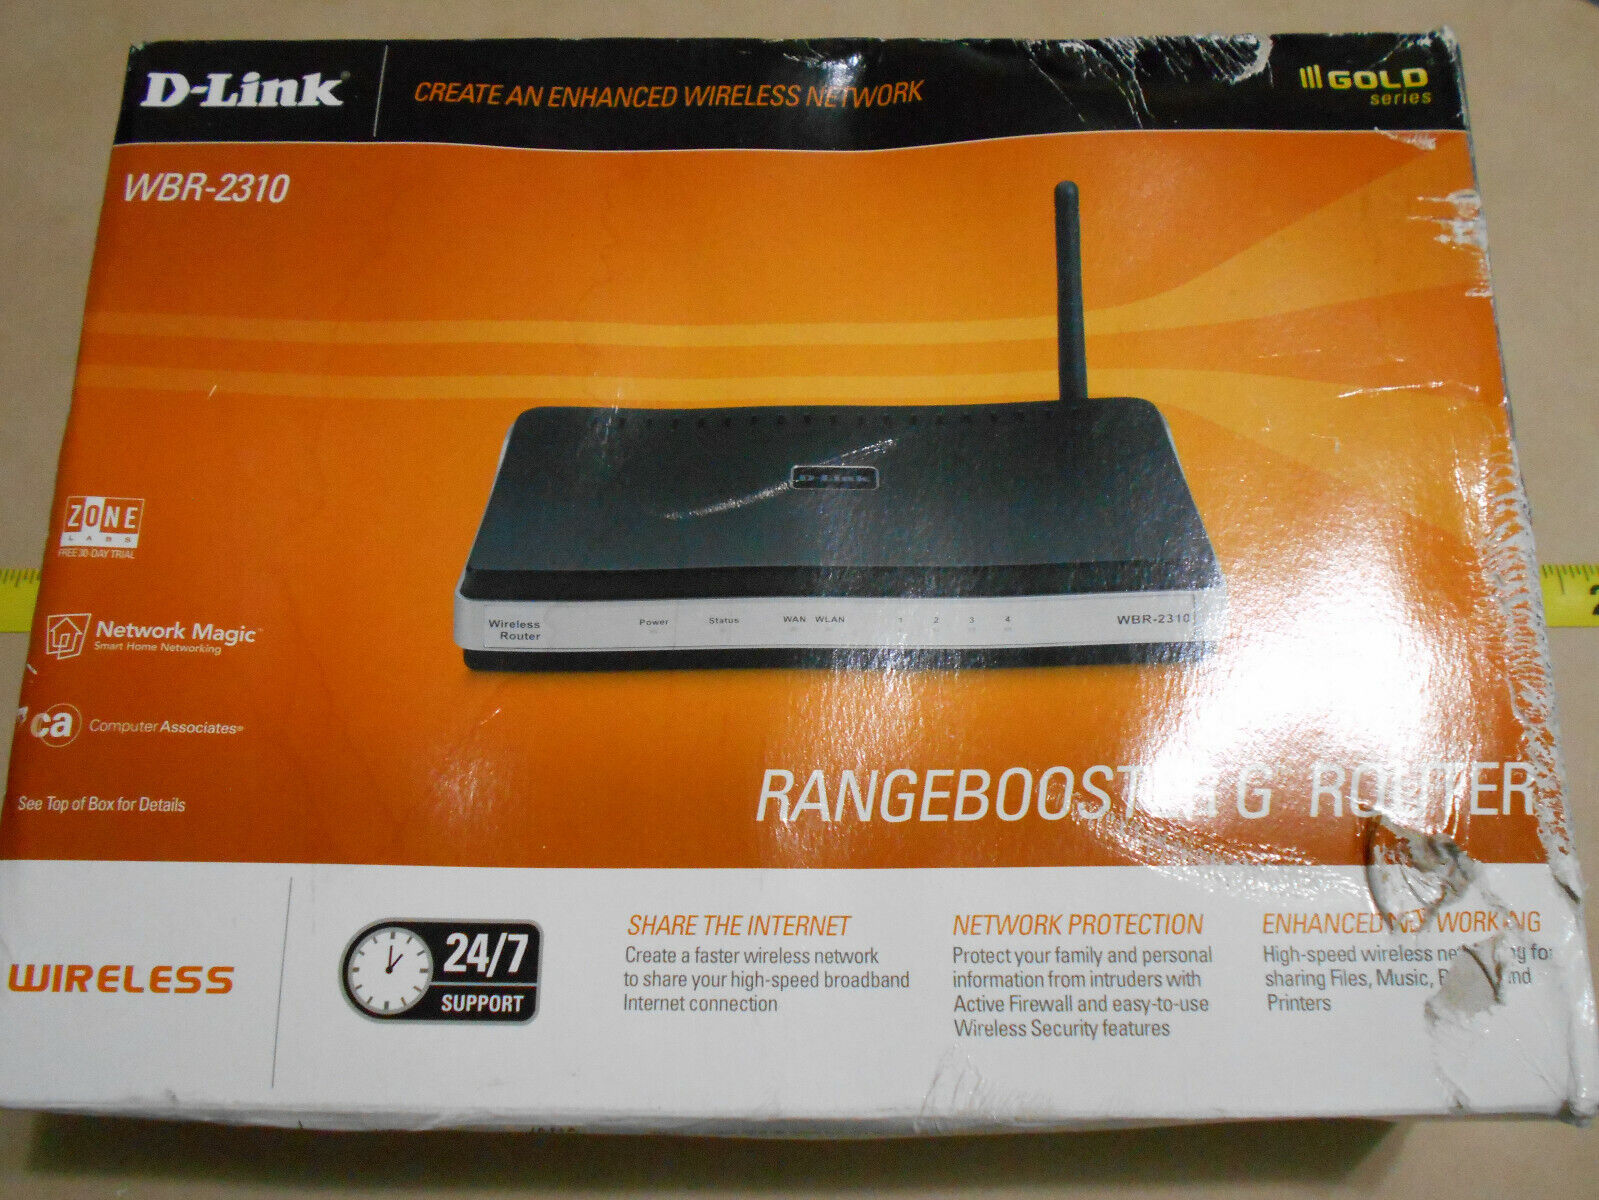 D-Link WBR-2310 Gold Series Rangebooster G Wireless Router w/o CD Power Cord